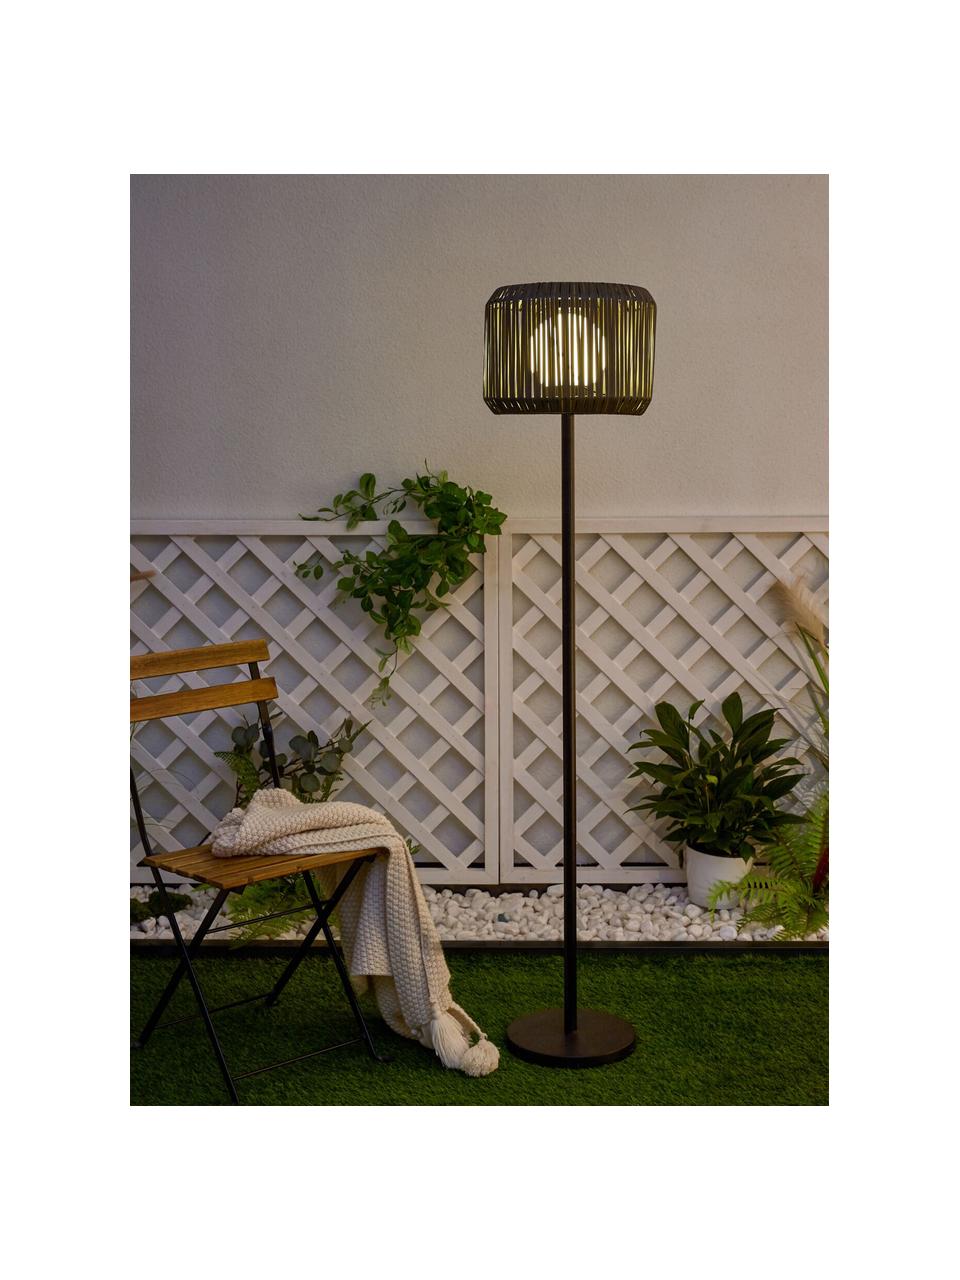 Lámpara de pie solar para exterior Sunshine Elegance, Pantalla: poliratán, Negro, gris, Ø 33 x Al 148 cm